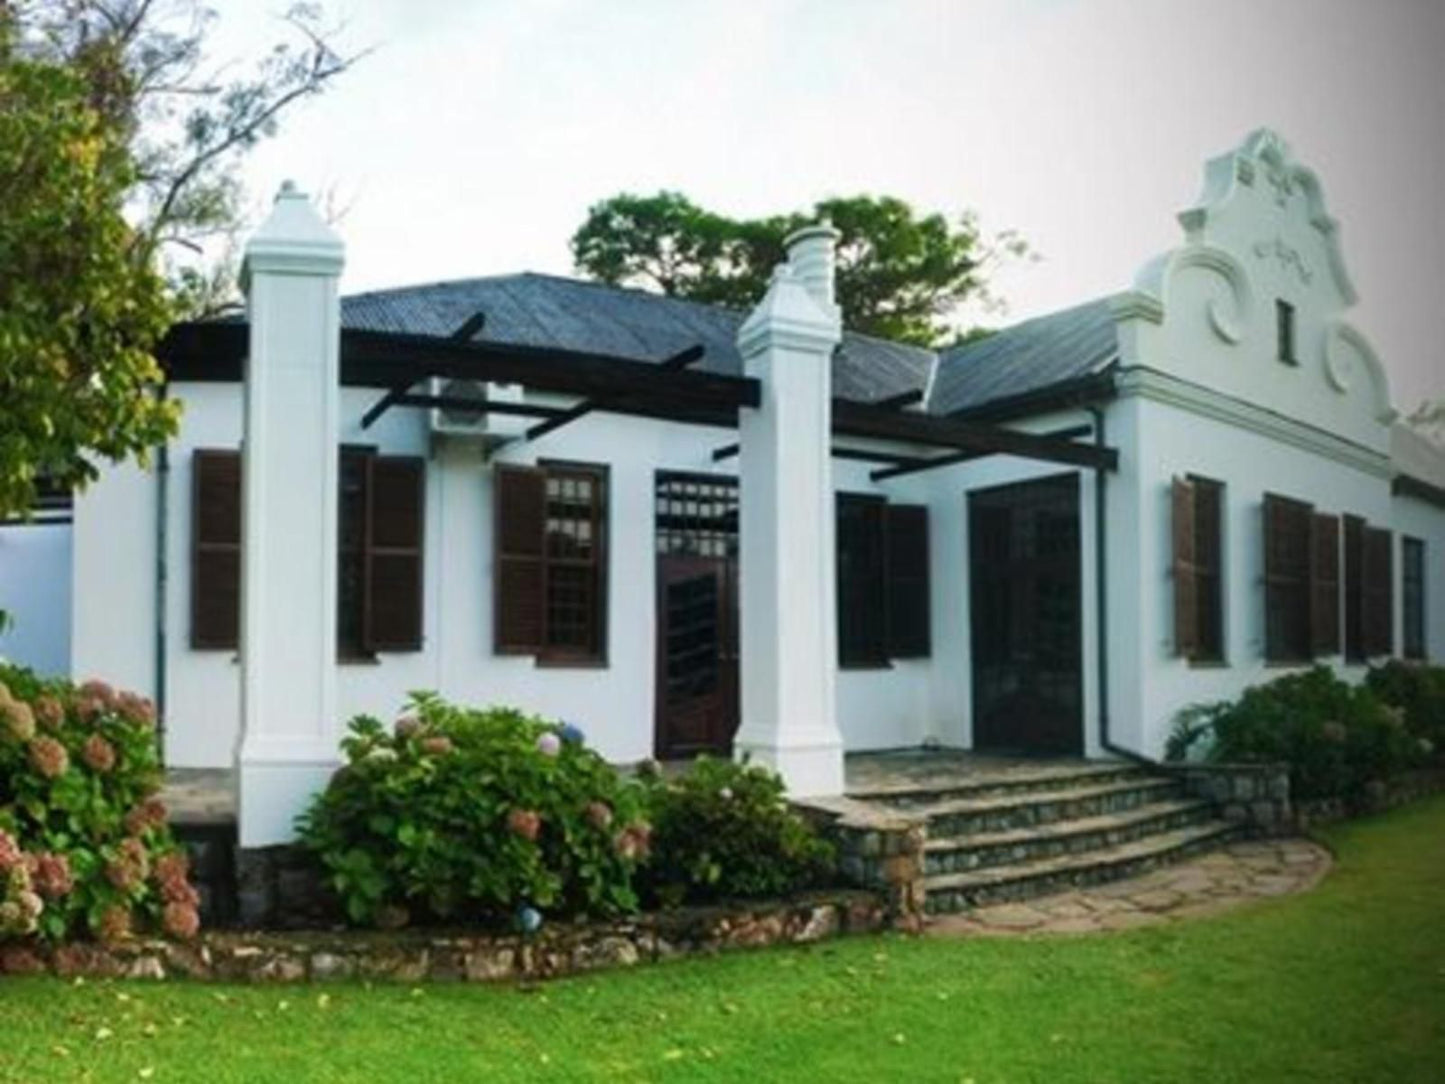 Jansen House Boutique Manor Irene Centurion Gauteng South Africa Building, Architecture, Asian Architecture, House